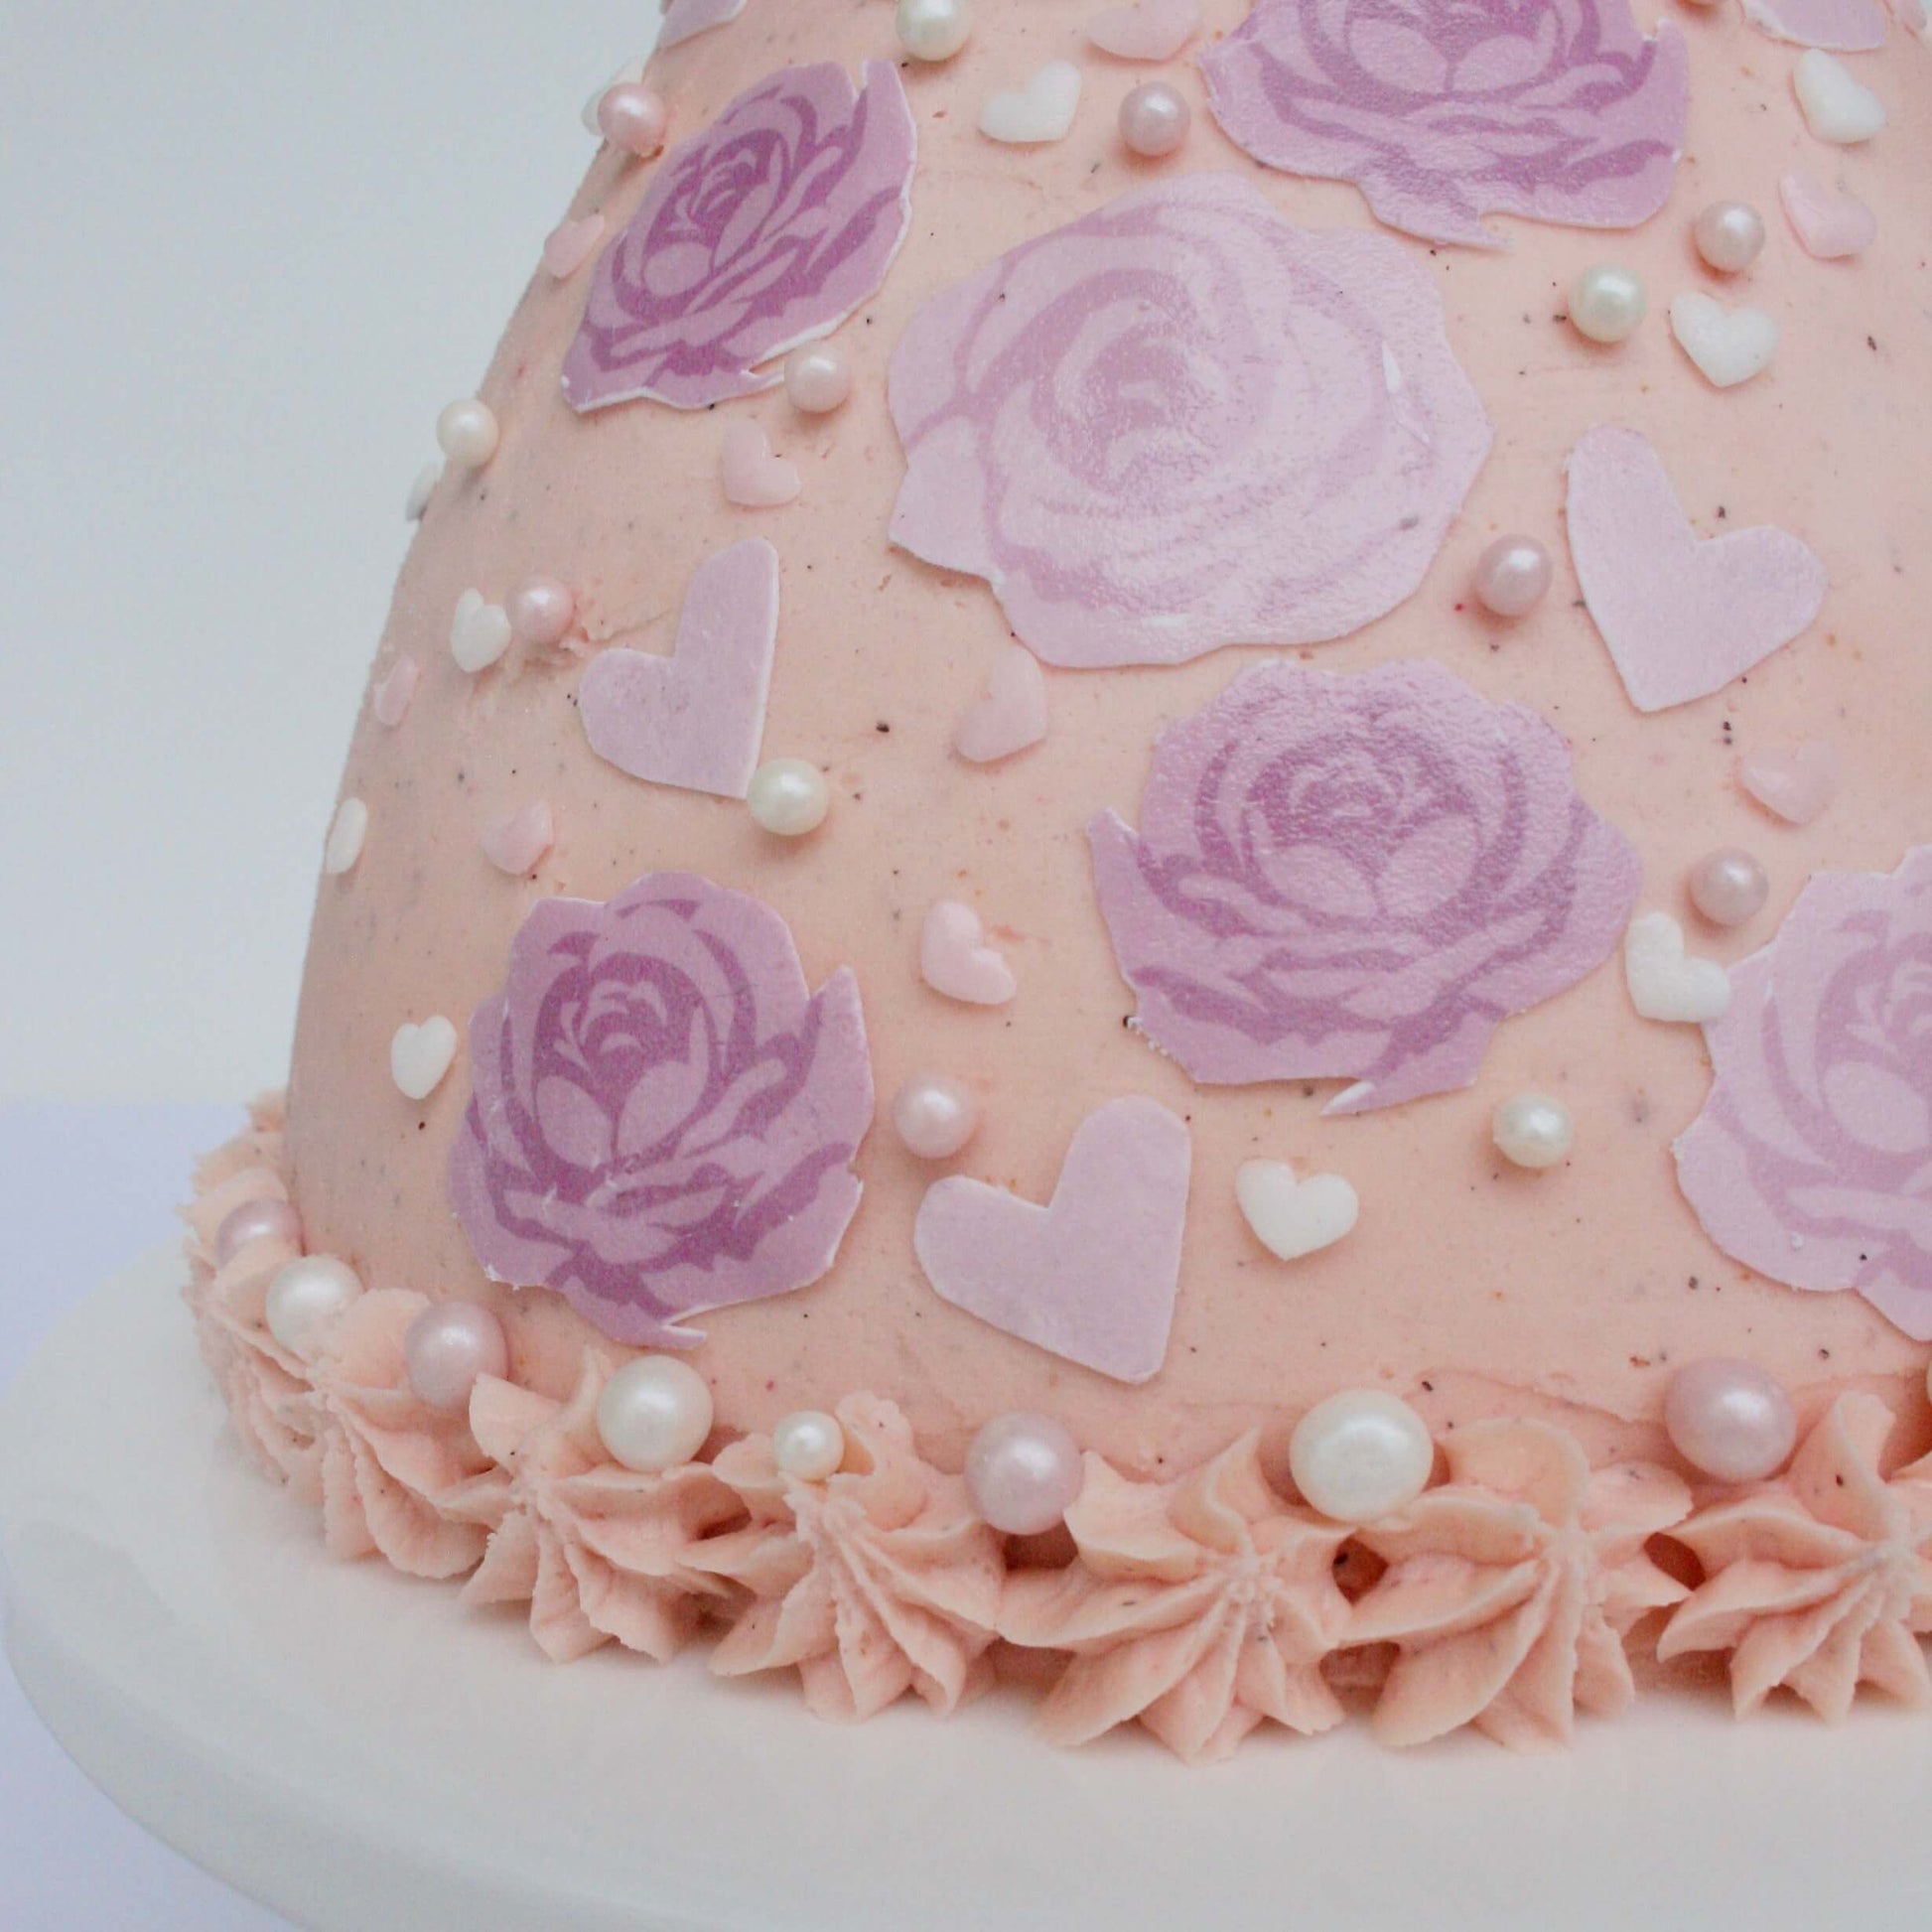 Rose Princess Cake Kit